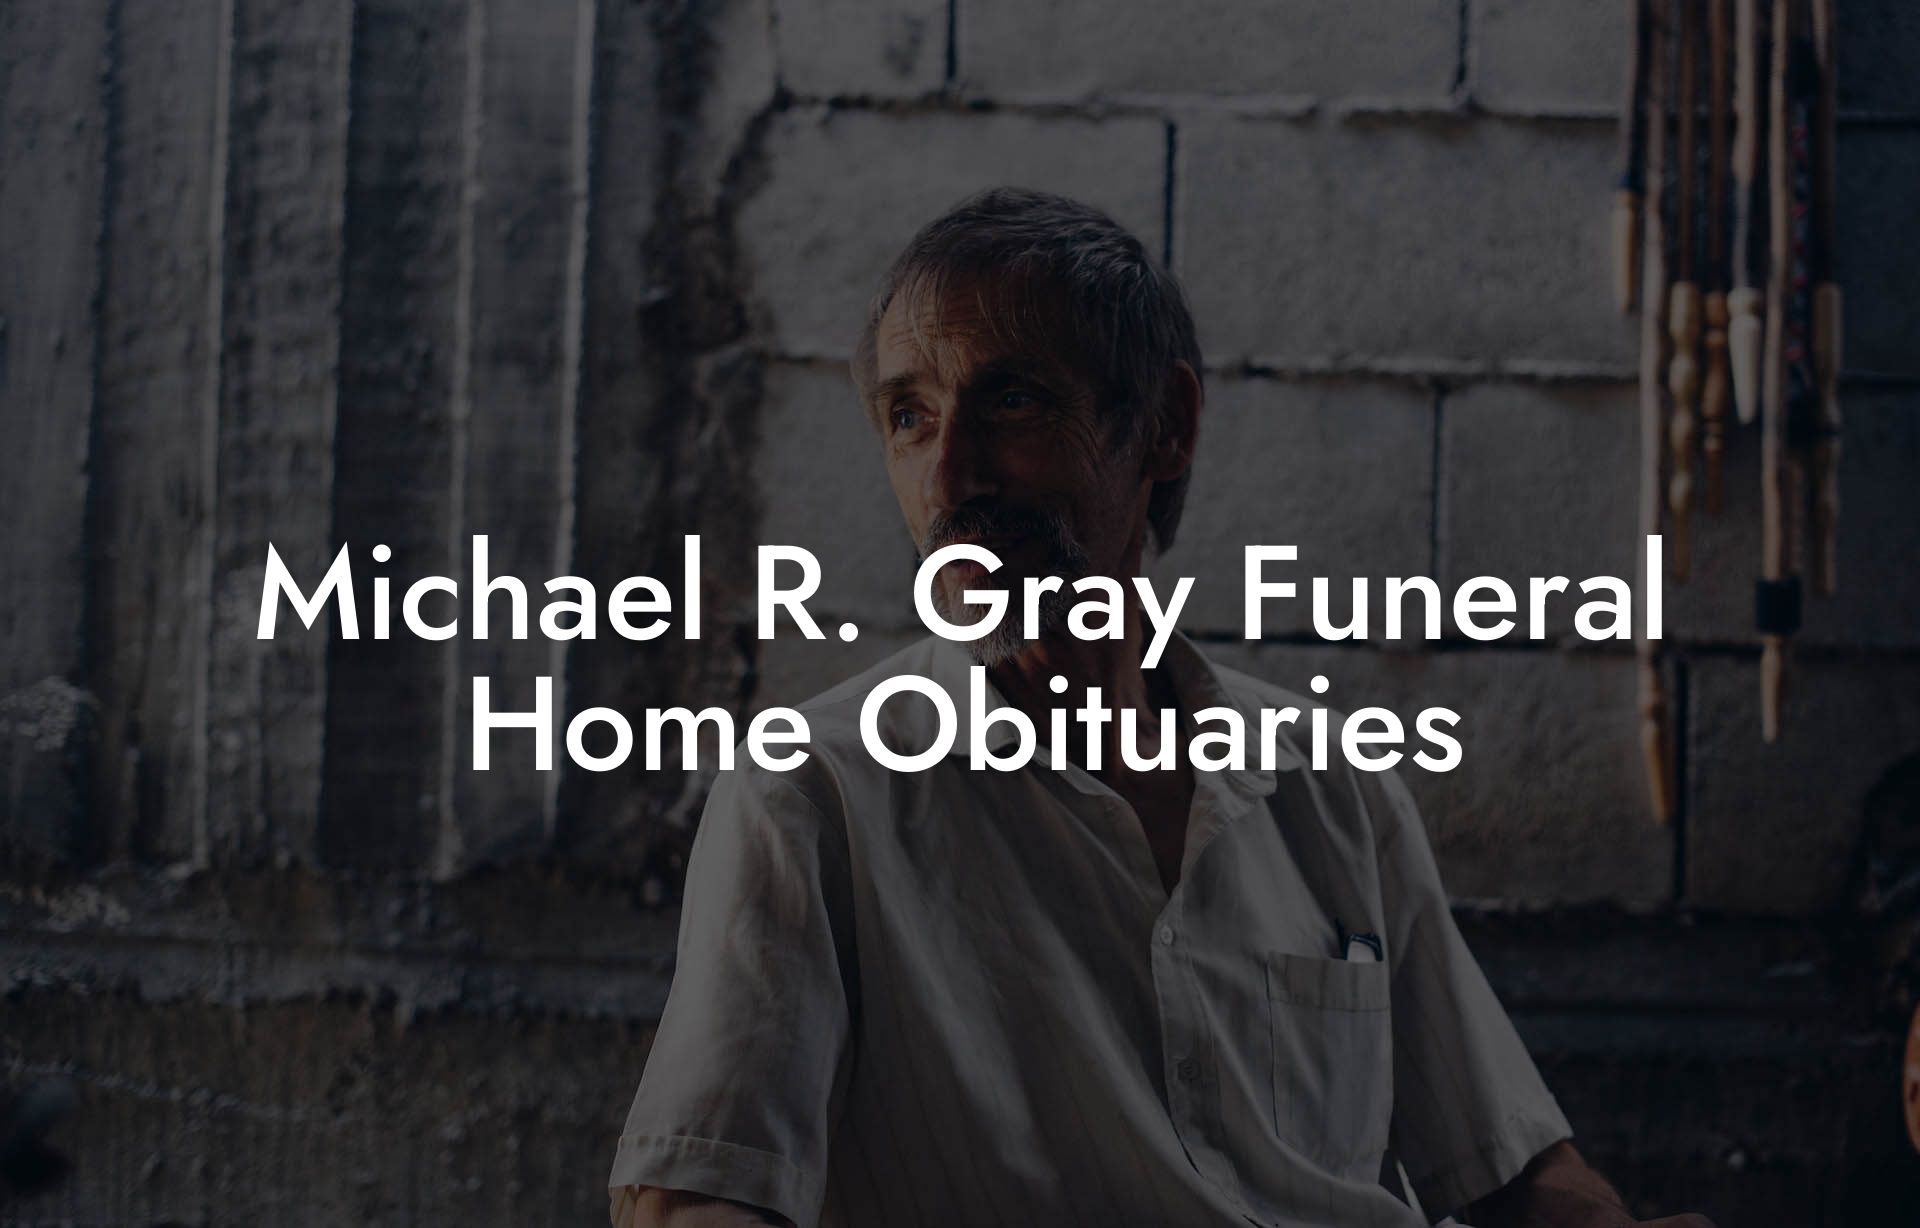 Michael R. Gray Funeral Home Obituaries